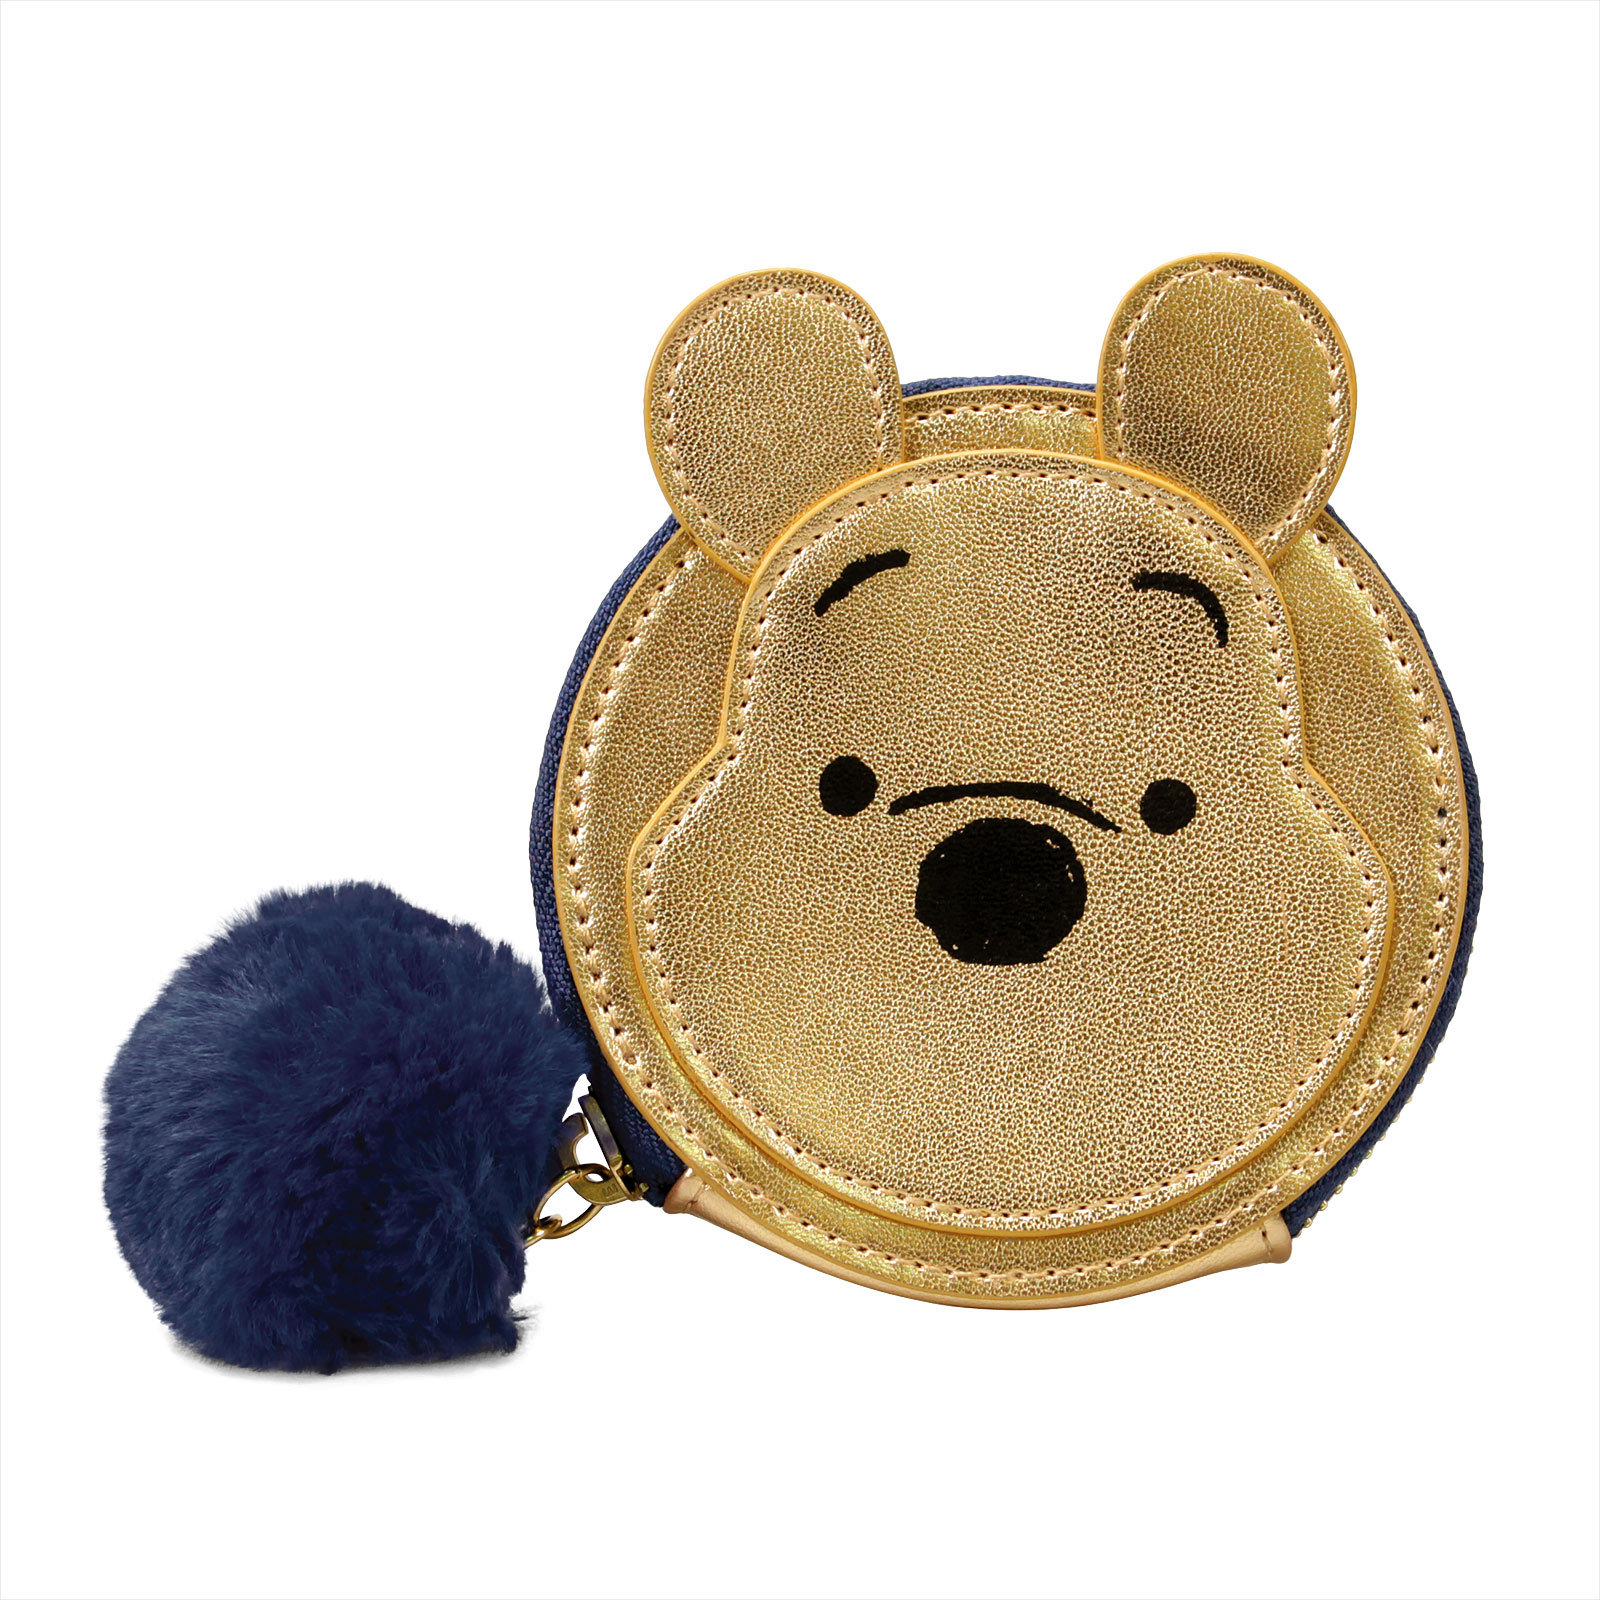 Winnie the Pooh coin purse with pom pom pendant